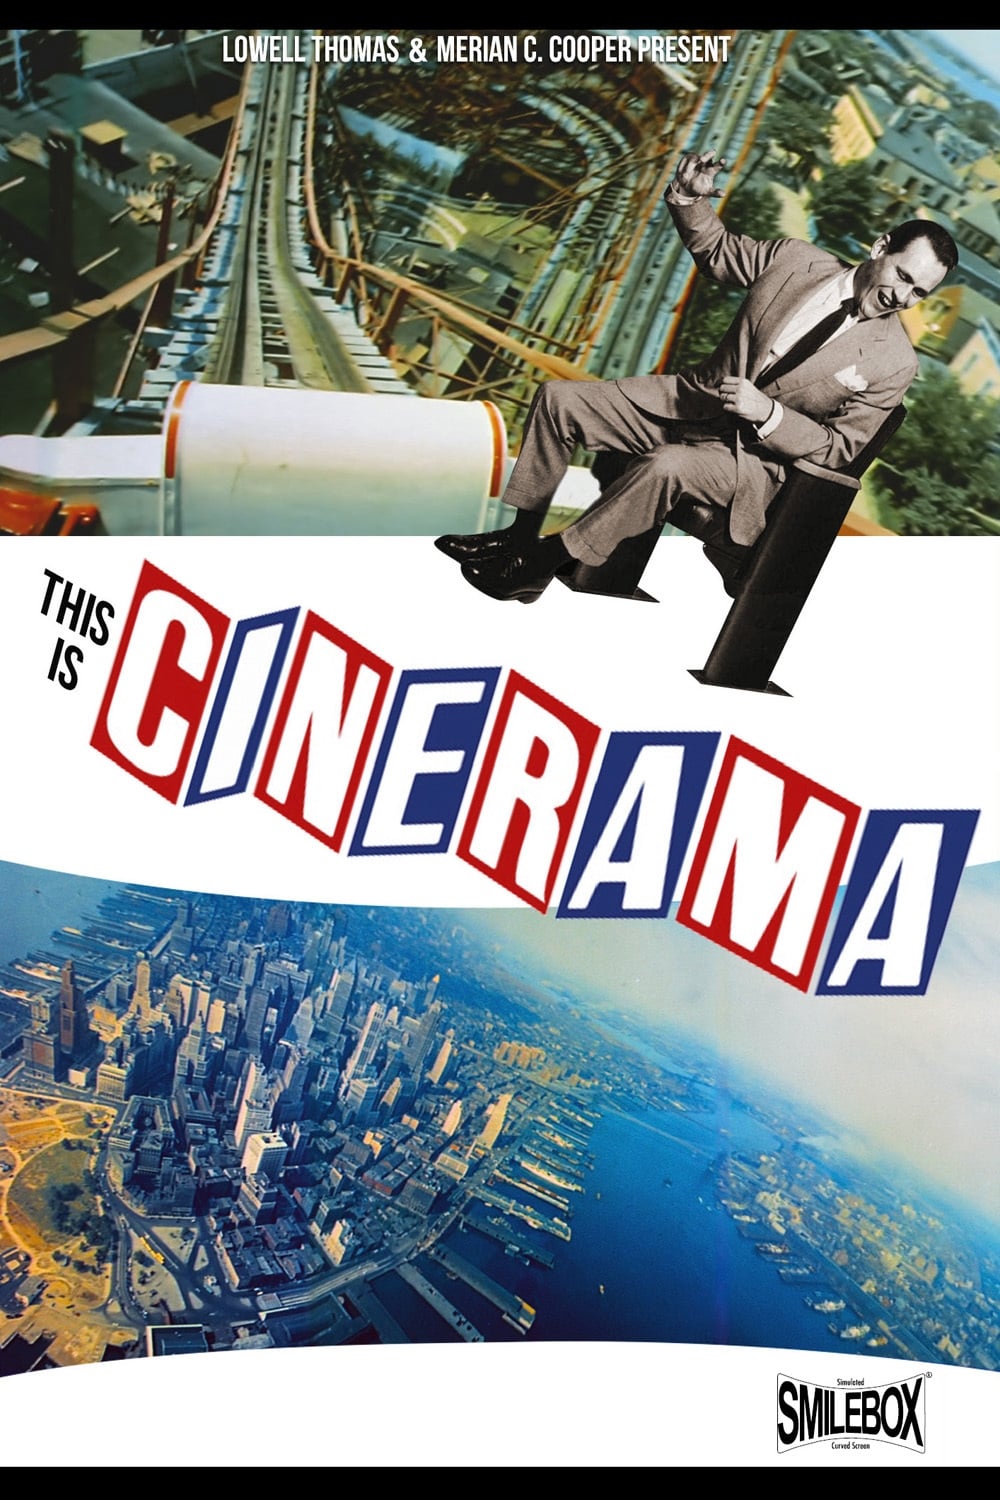 This Is Cinerama